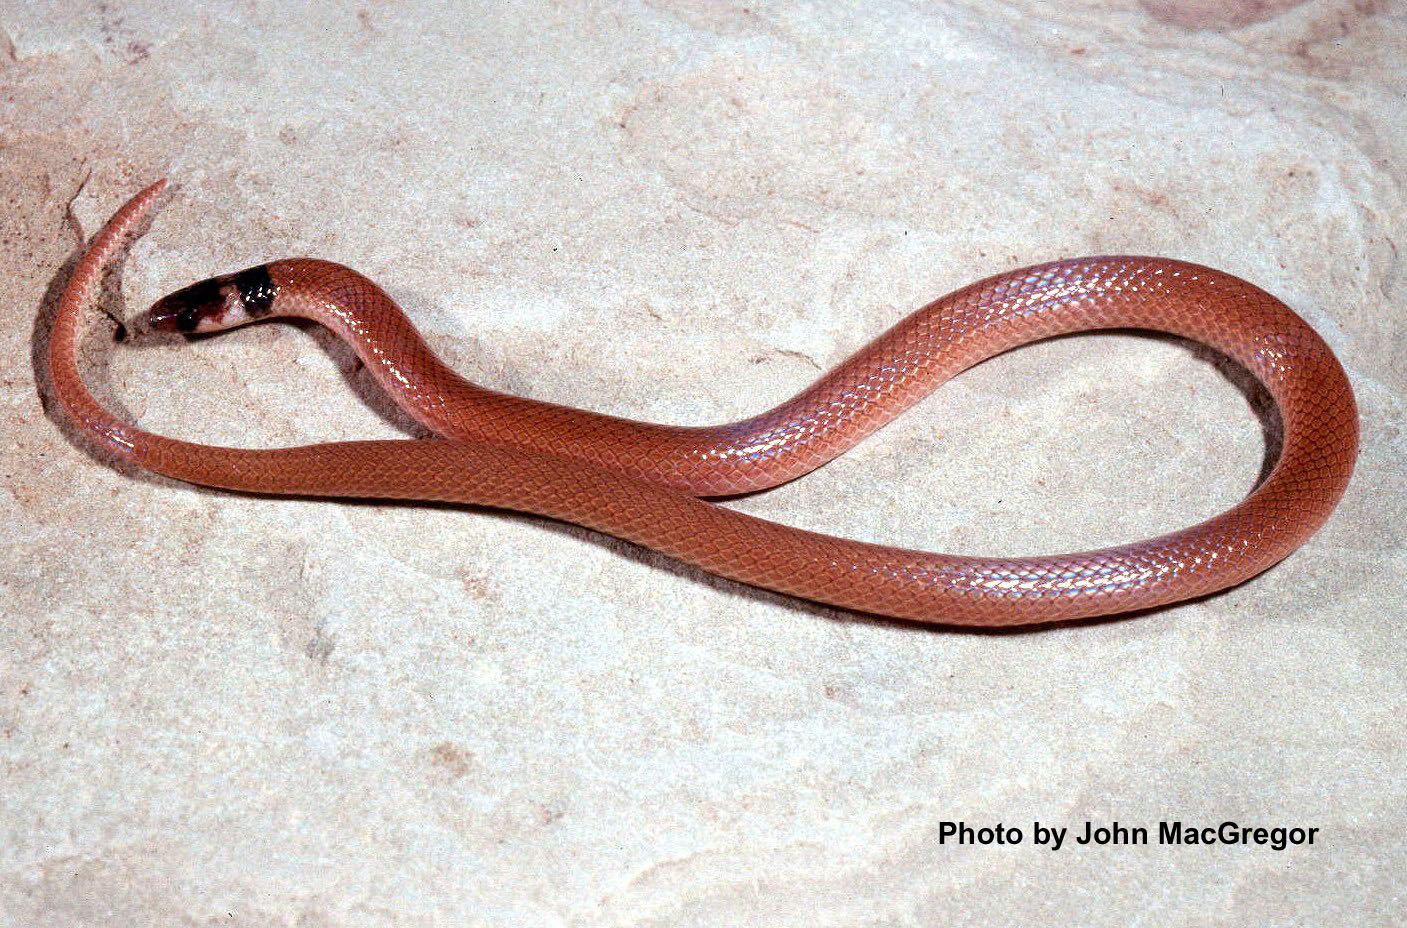 Tantilla coronata Baird and Girard – Southeastern Crowned Snake